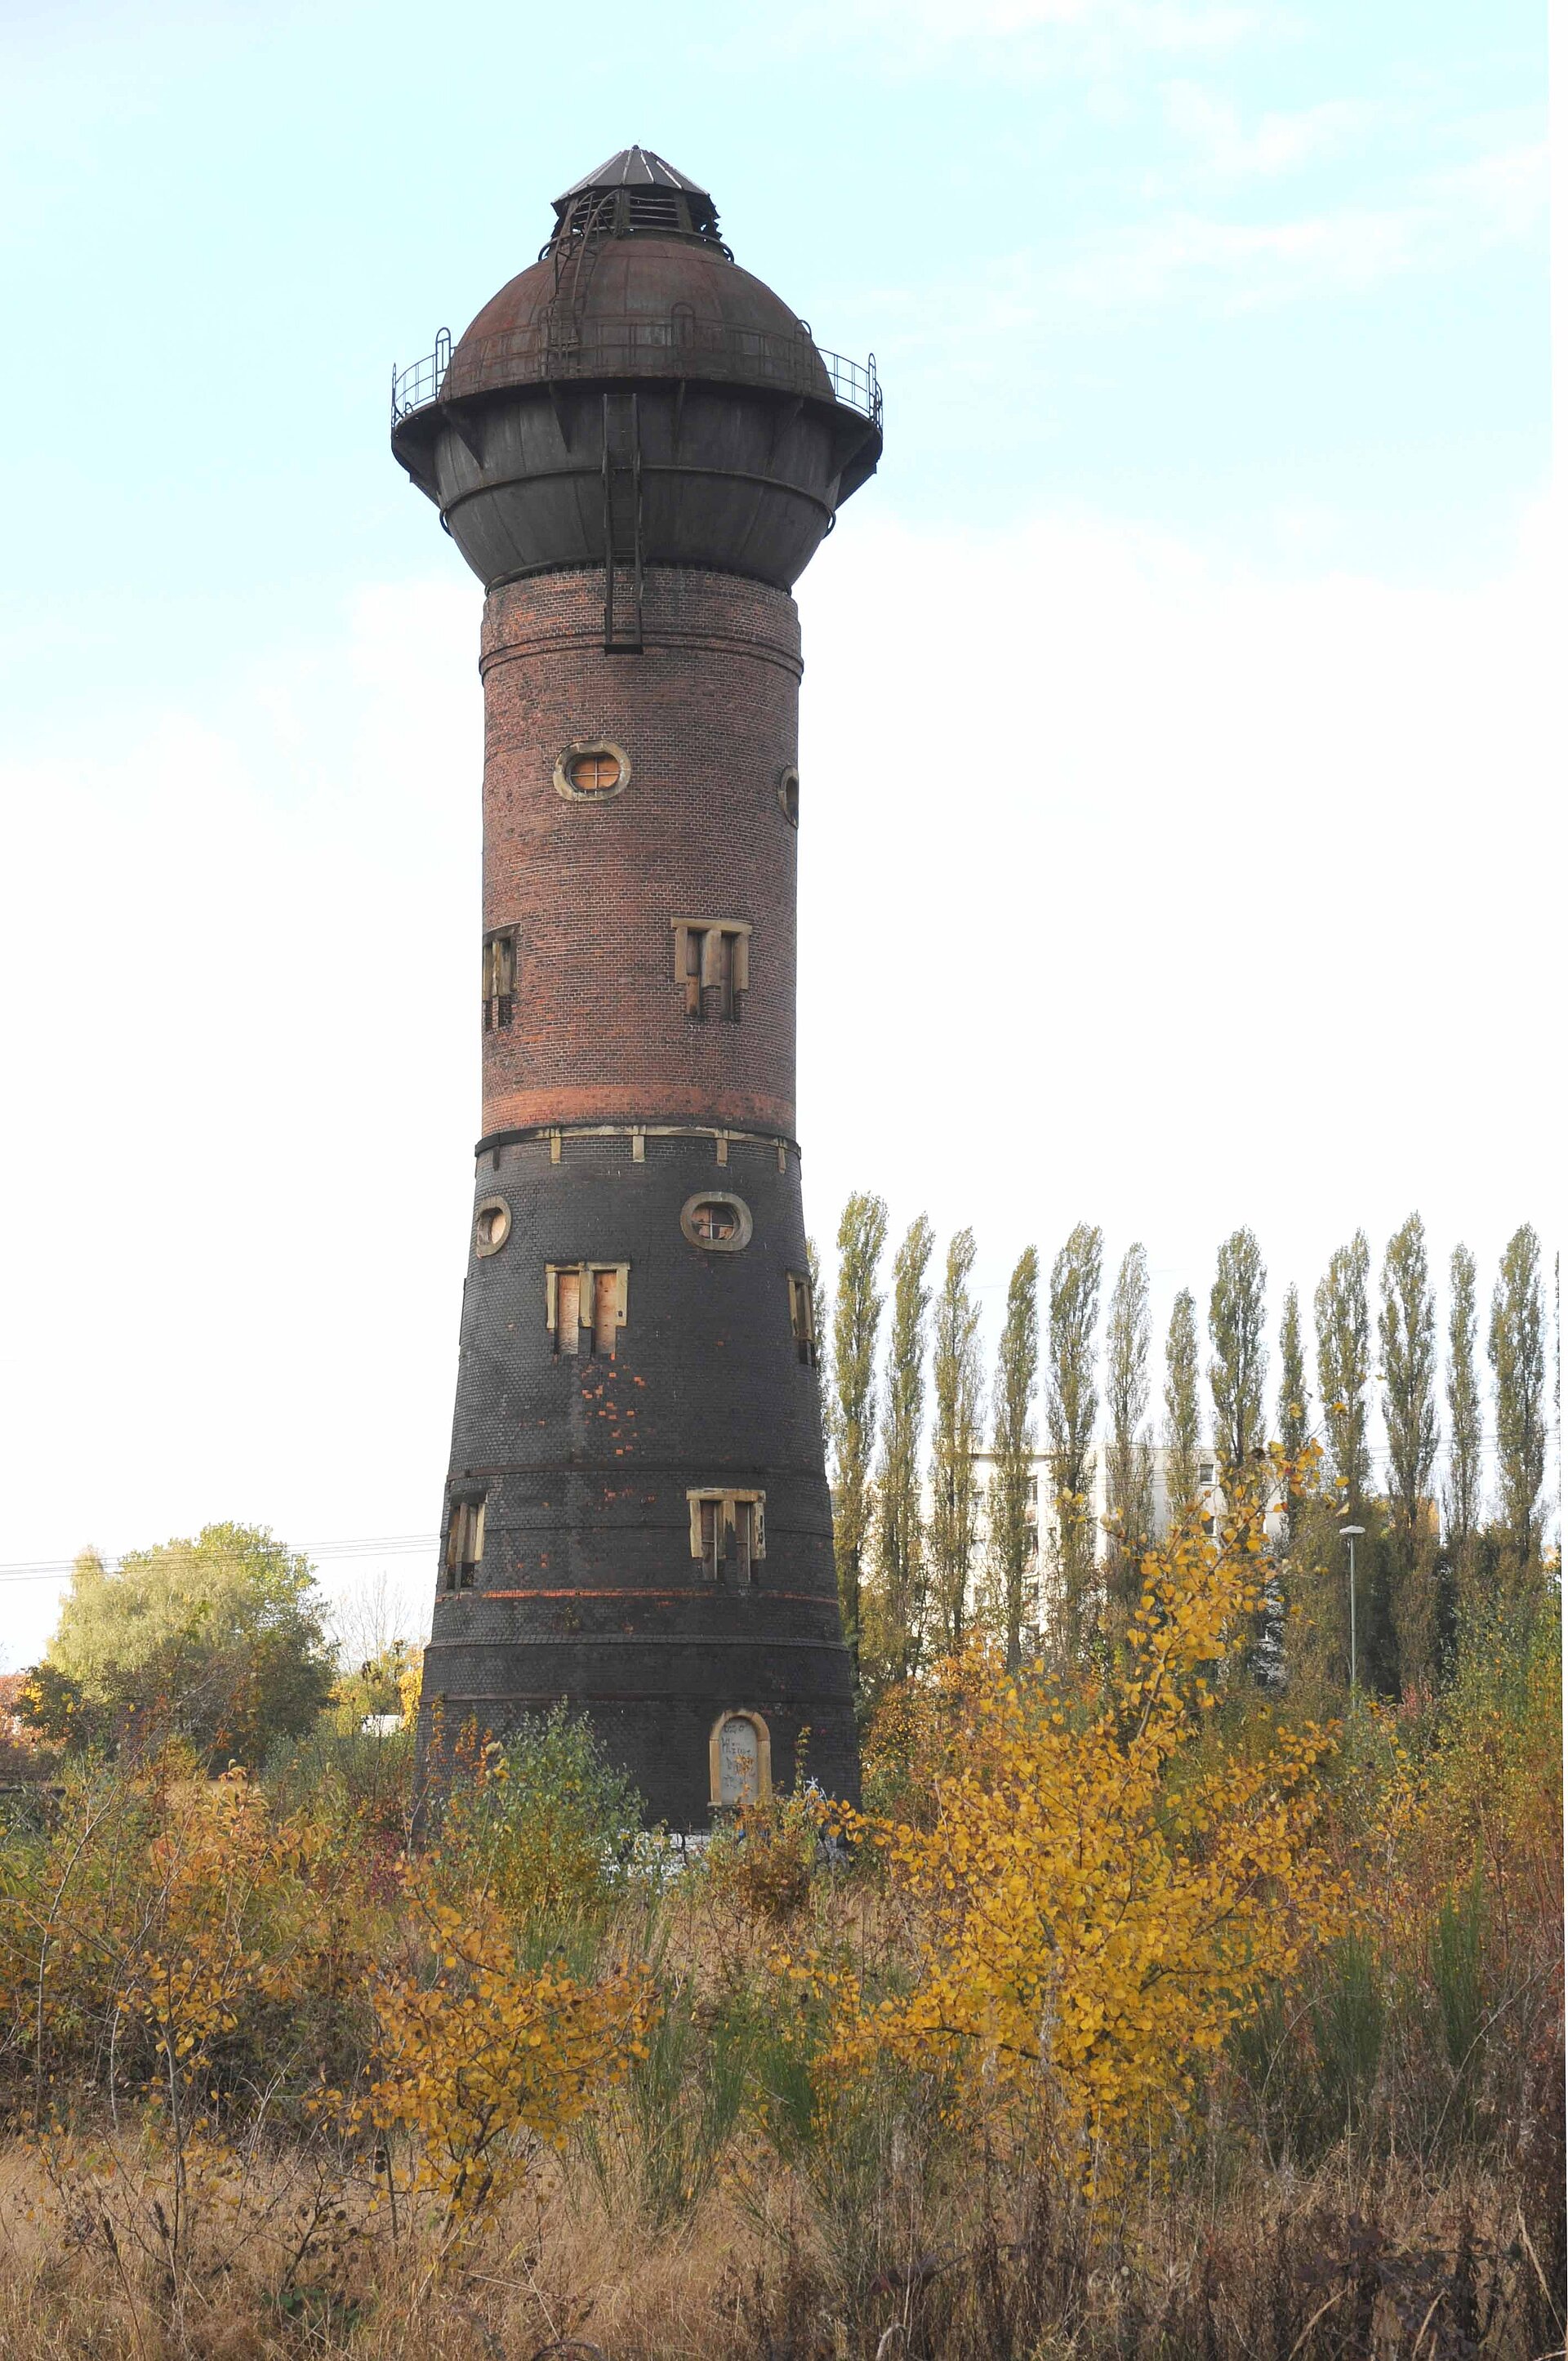 Wasserturm am Rangierbahnhof Duisburg.